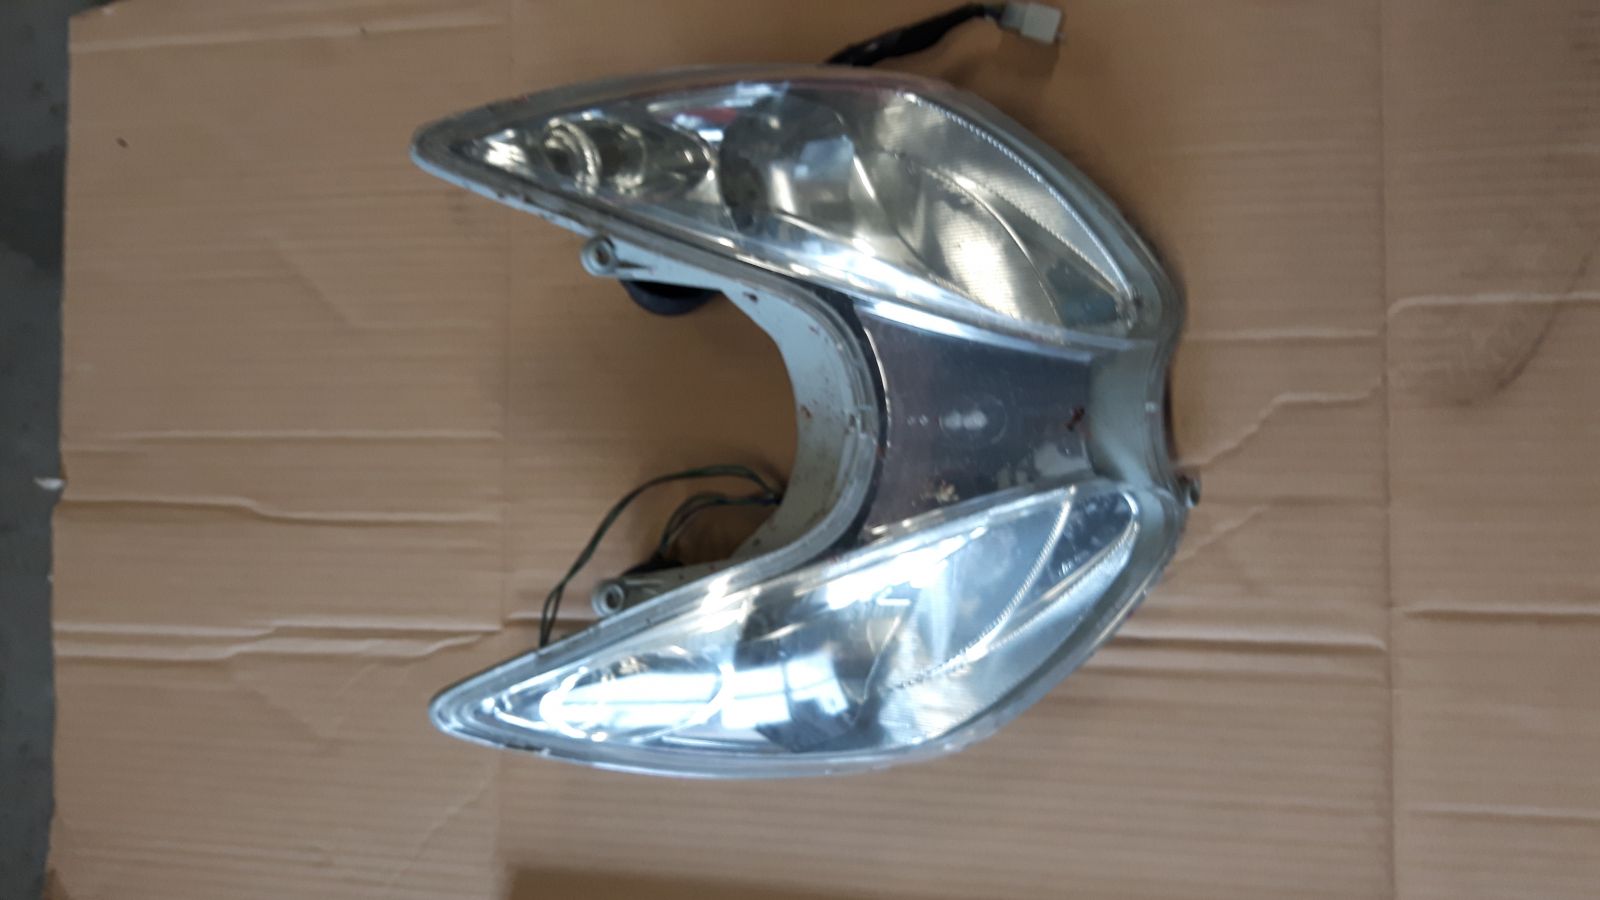 Sym Jet headlamp / front lamp